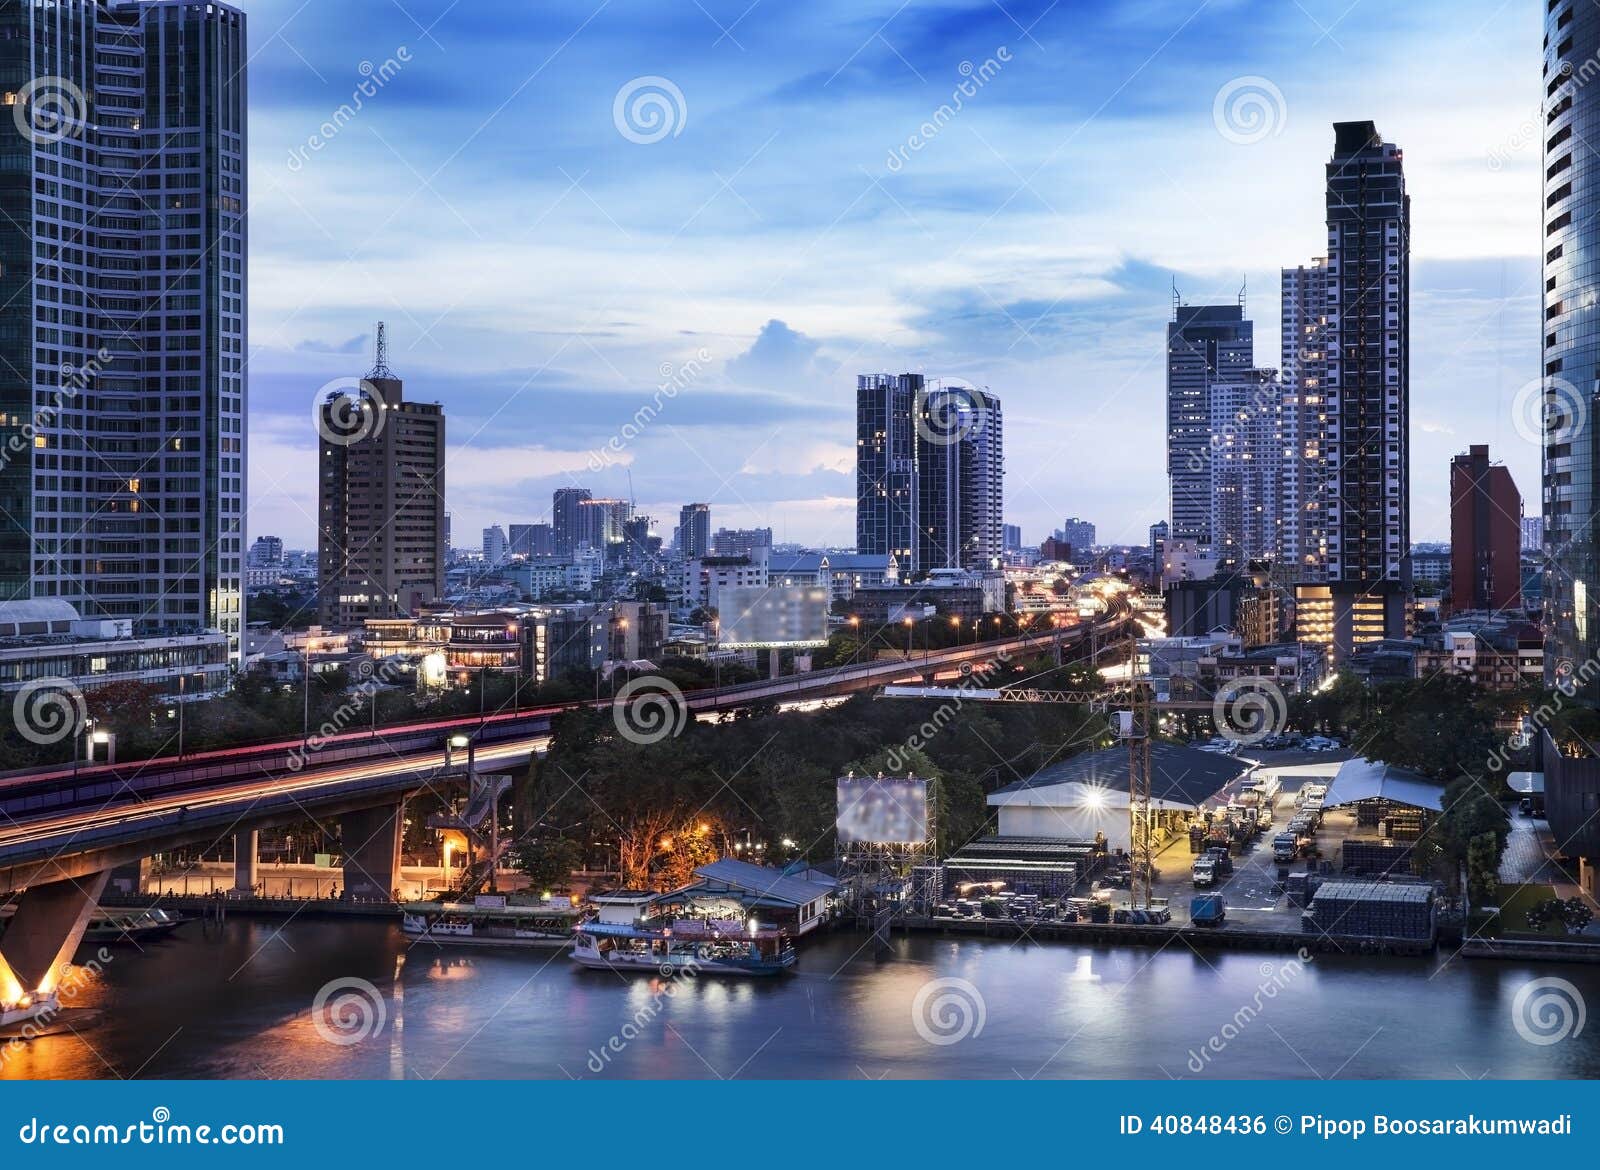 urban city skyline, chao phraya river, bangkok, thailand.